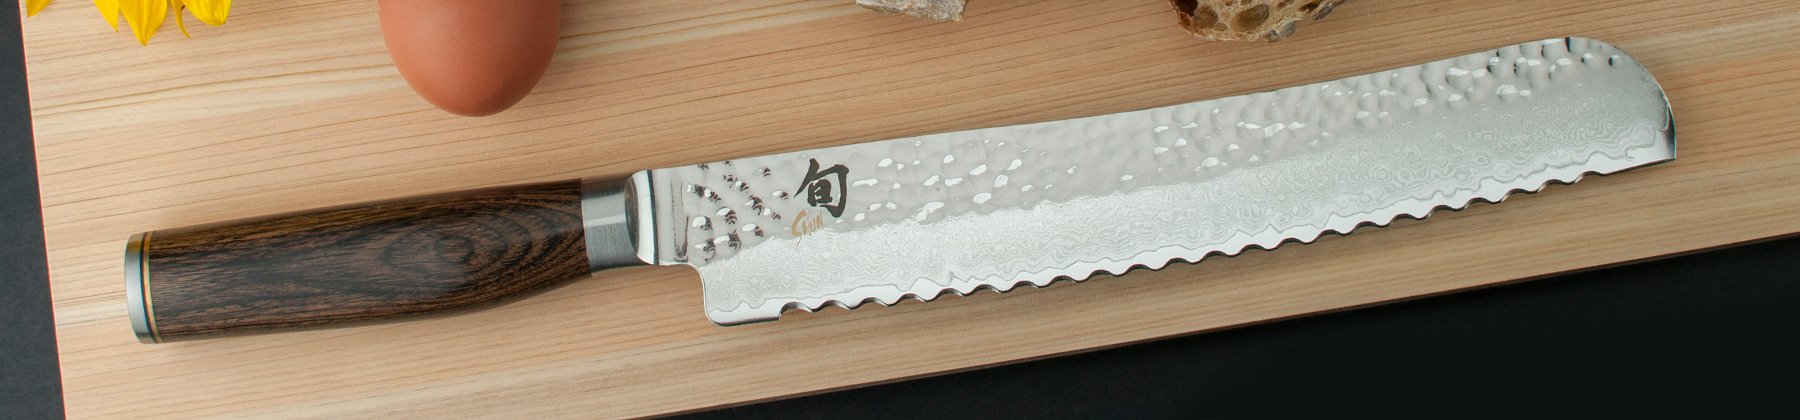 Photo of Shun bread knife.